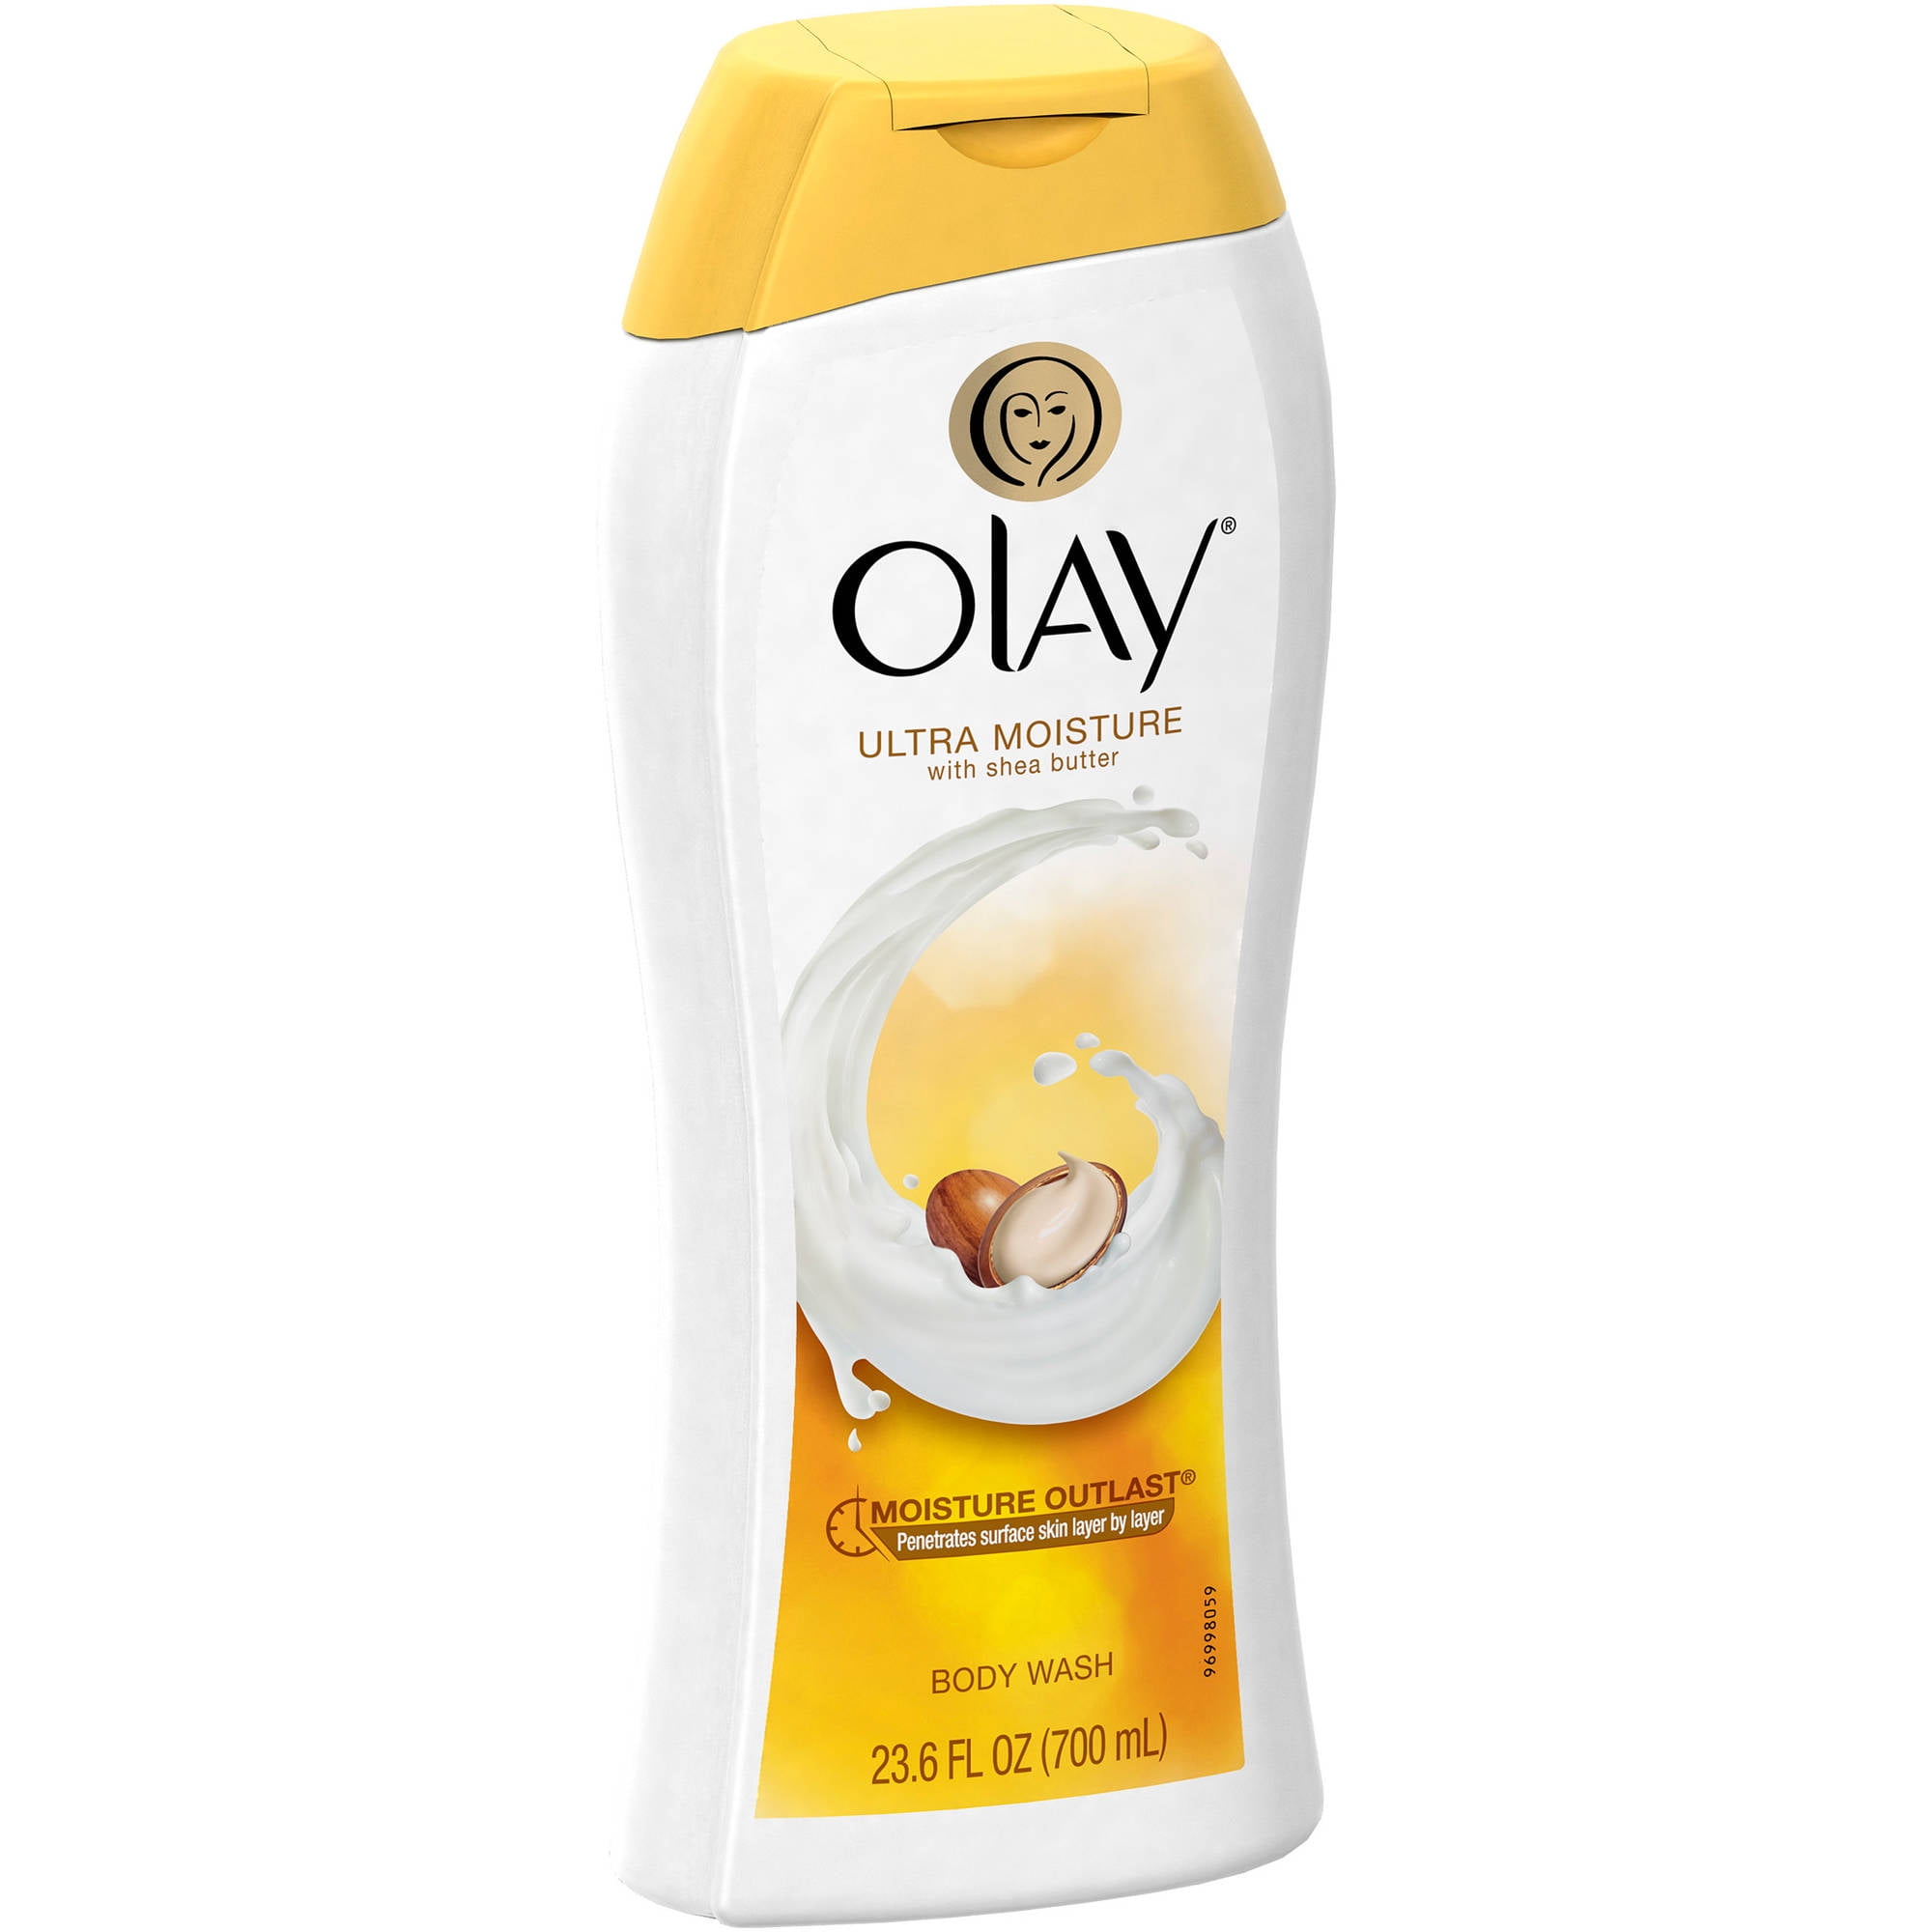 Olay Ultra Moisture Body Wash with Shea Butter, 23.6 fl oz